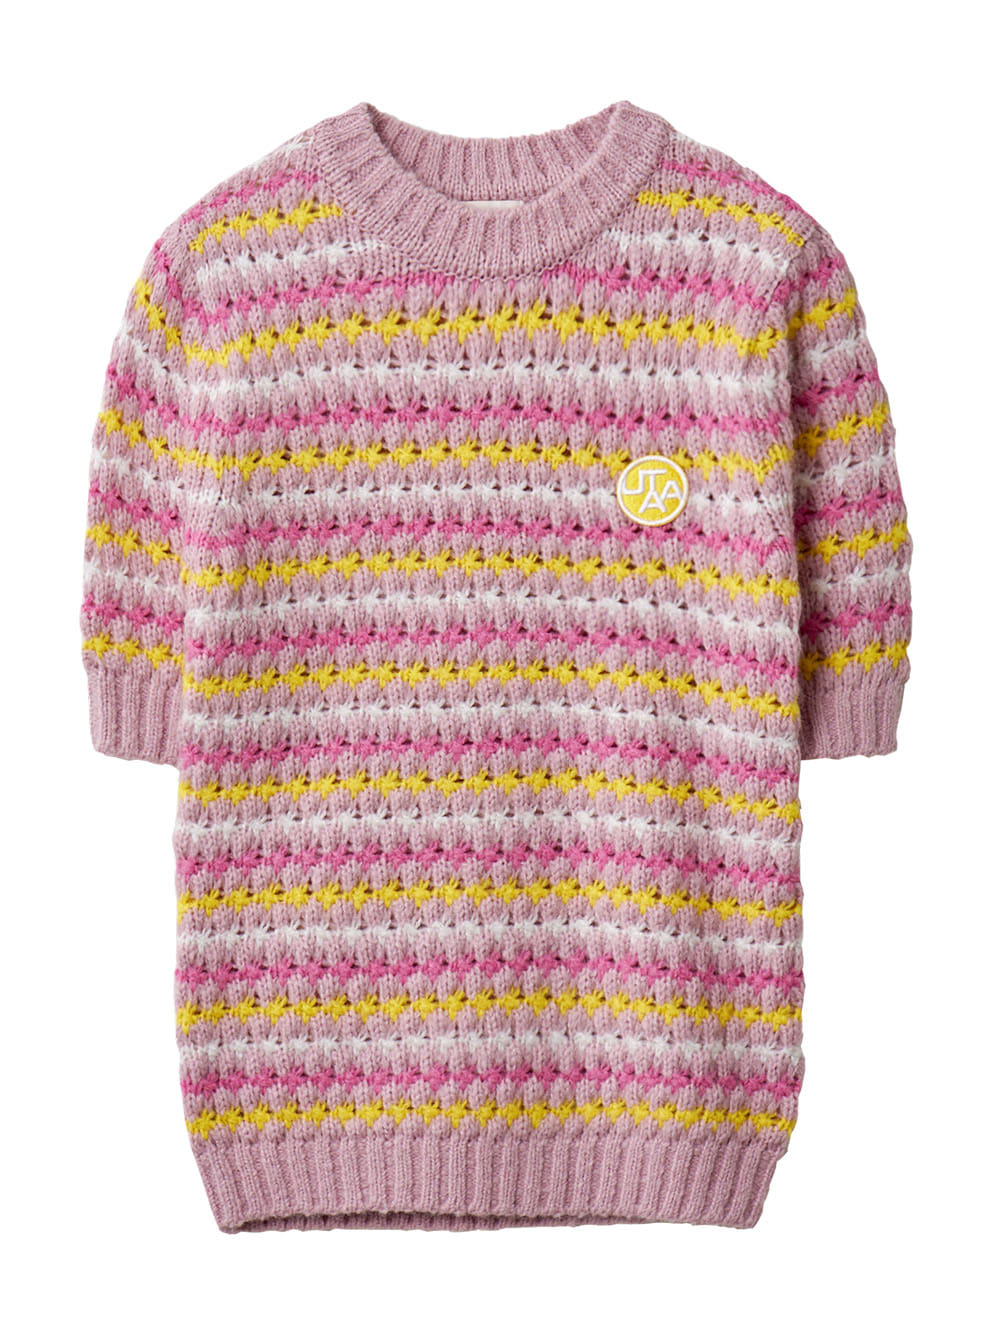 UTAA 3 Color Pop Stripe Knit Tee  : Light Pink (UB3KTF210LP)